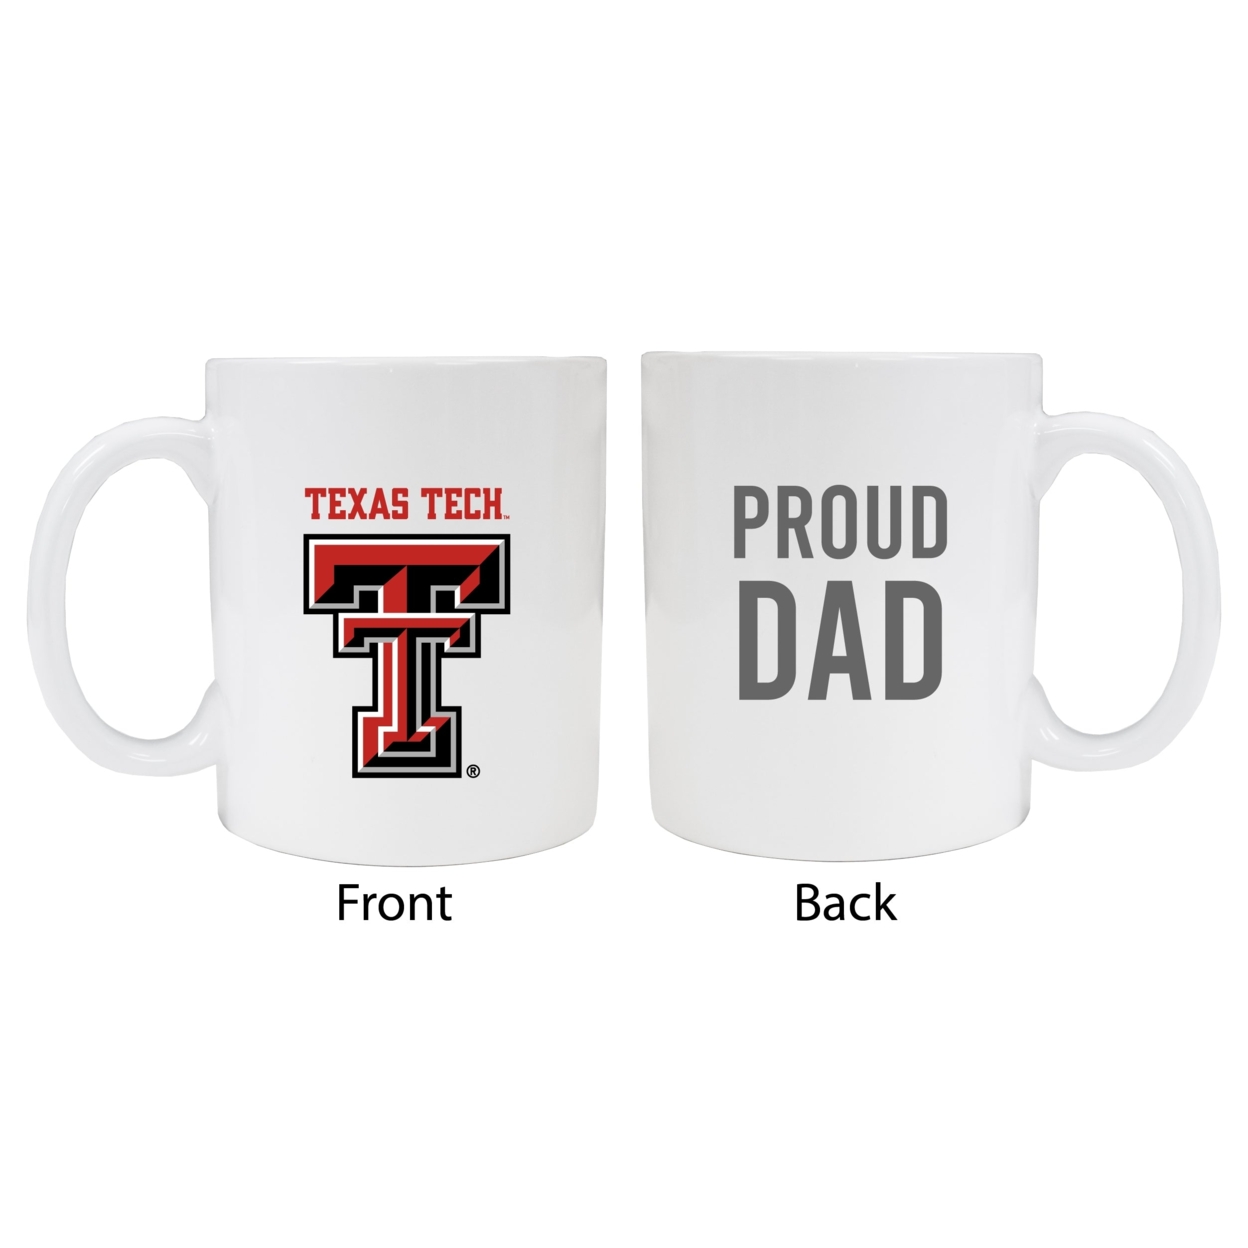 Texas Tech Red Raiders Proud Dad Ceramic Coffee Mug - White (2 Pack)